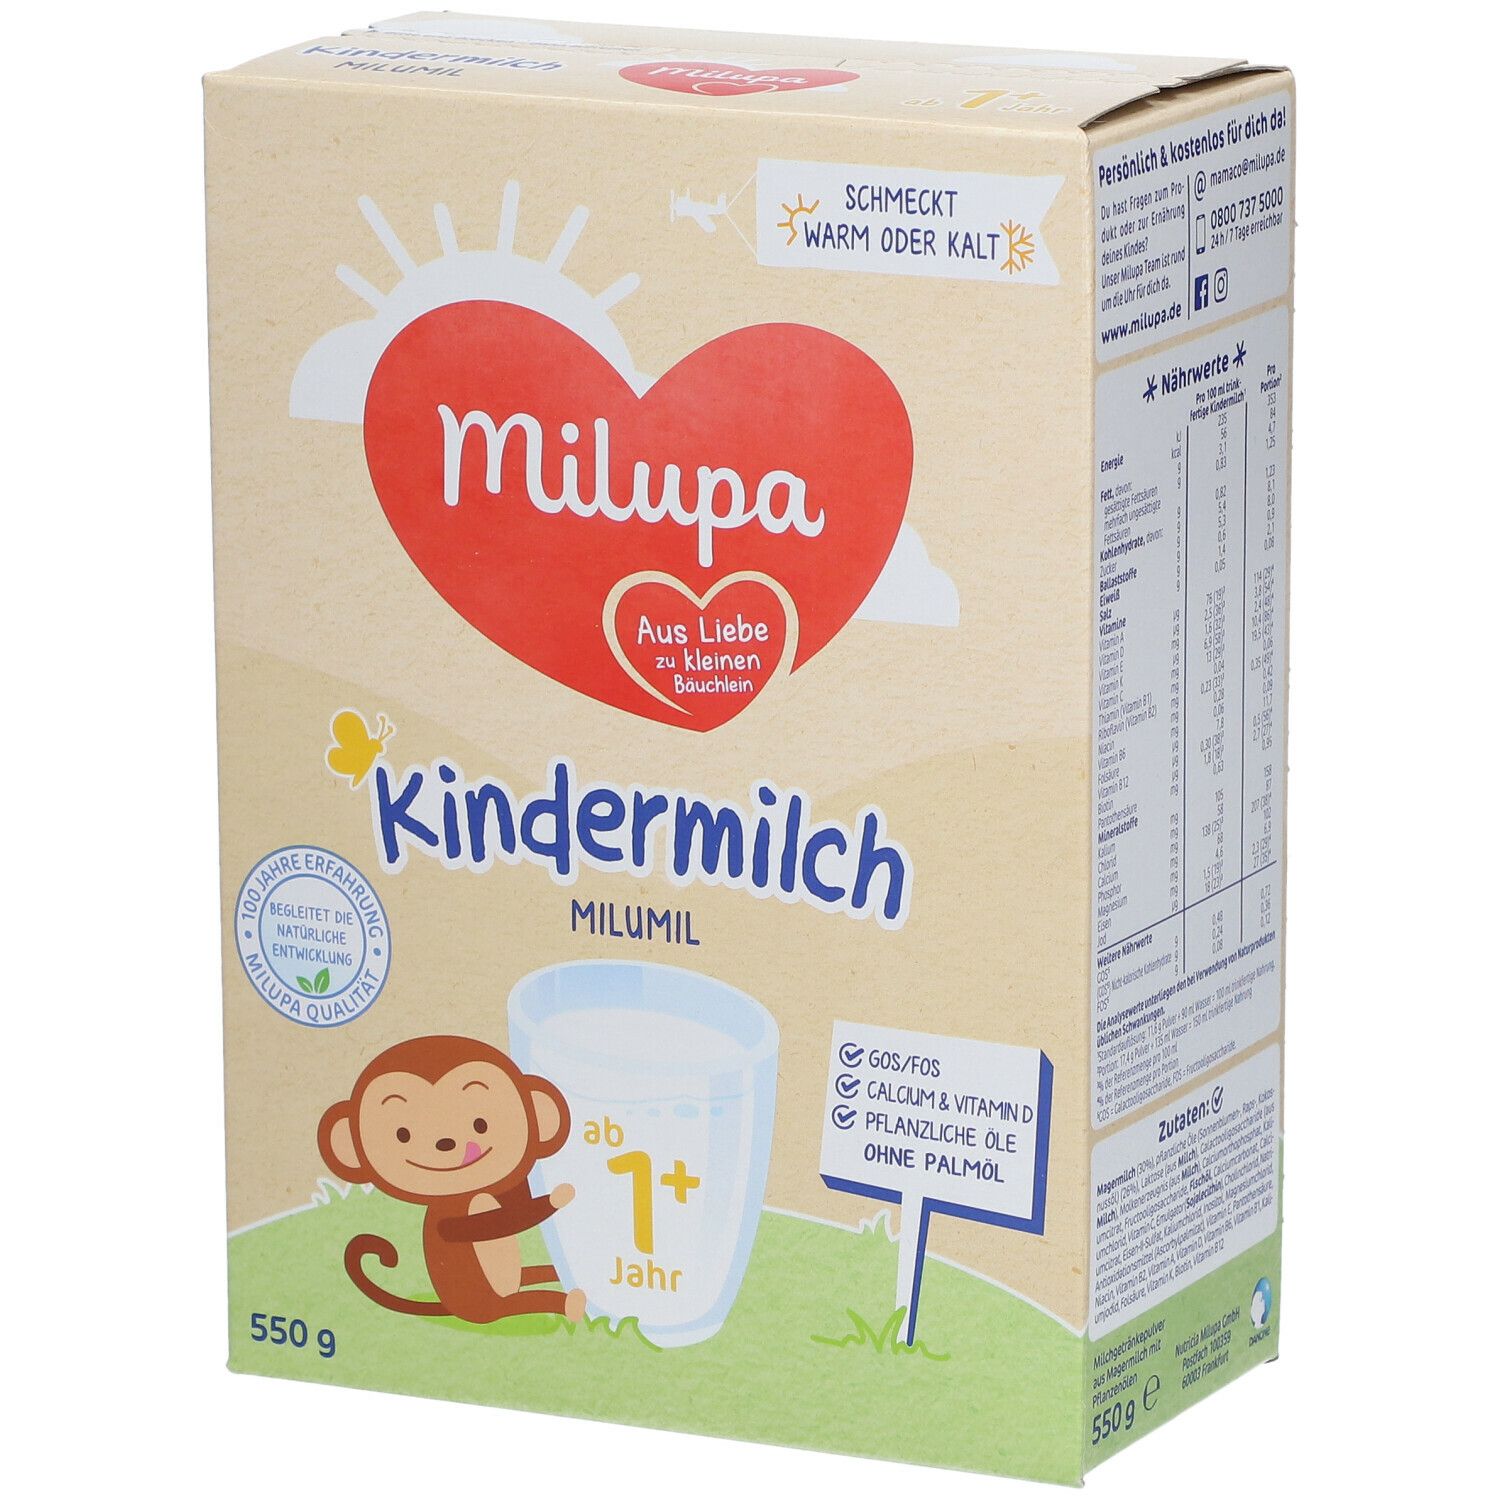 Milupa Kindermilch MILUMIL ab 1+ Jahr